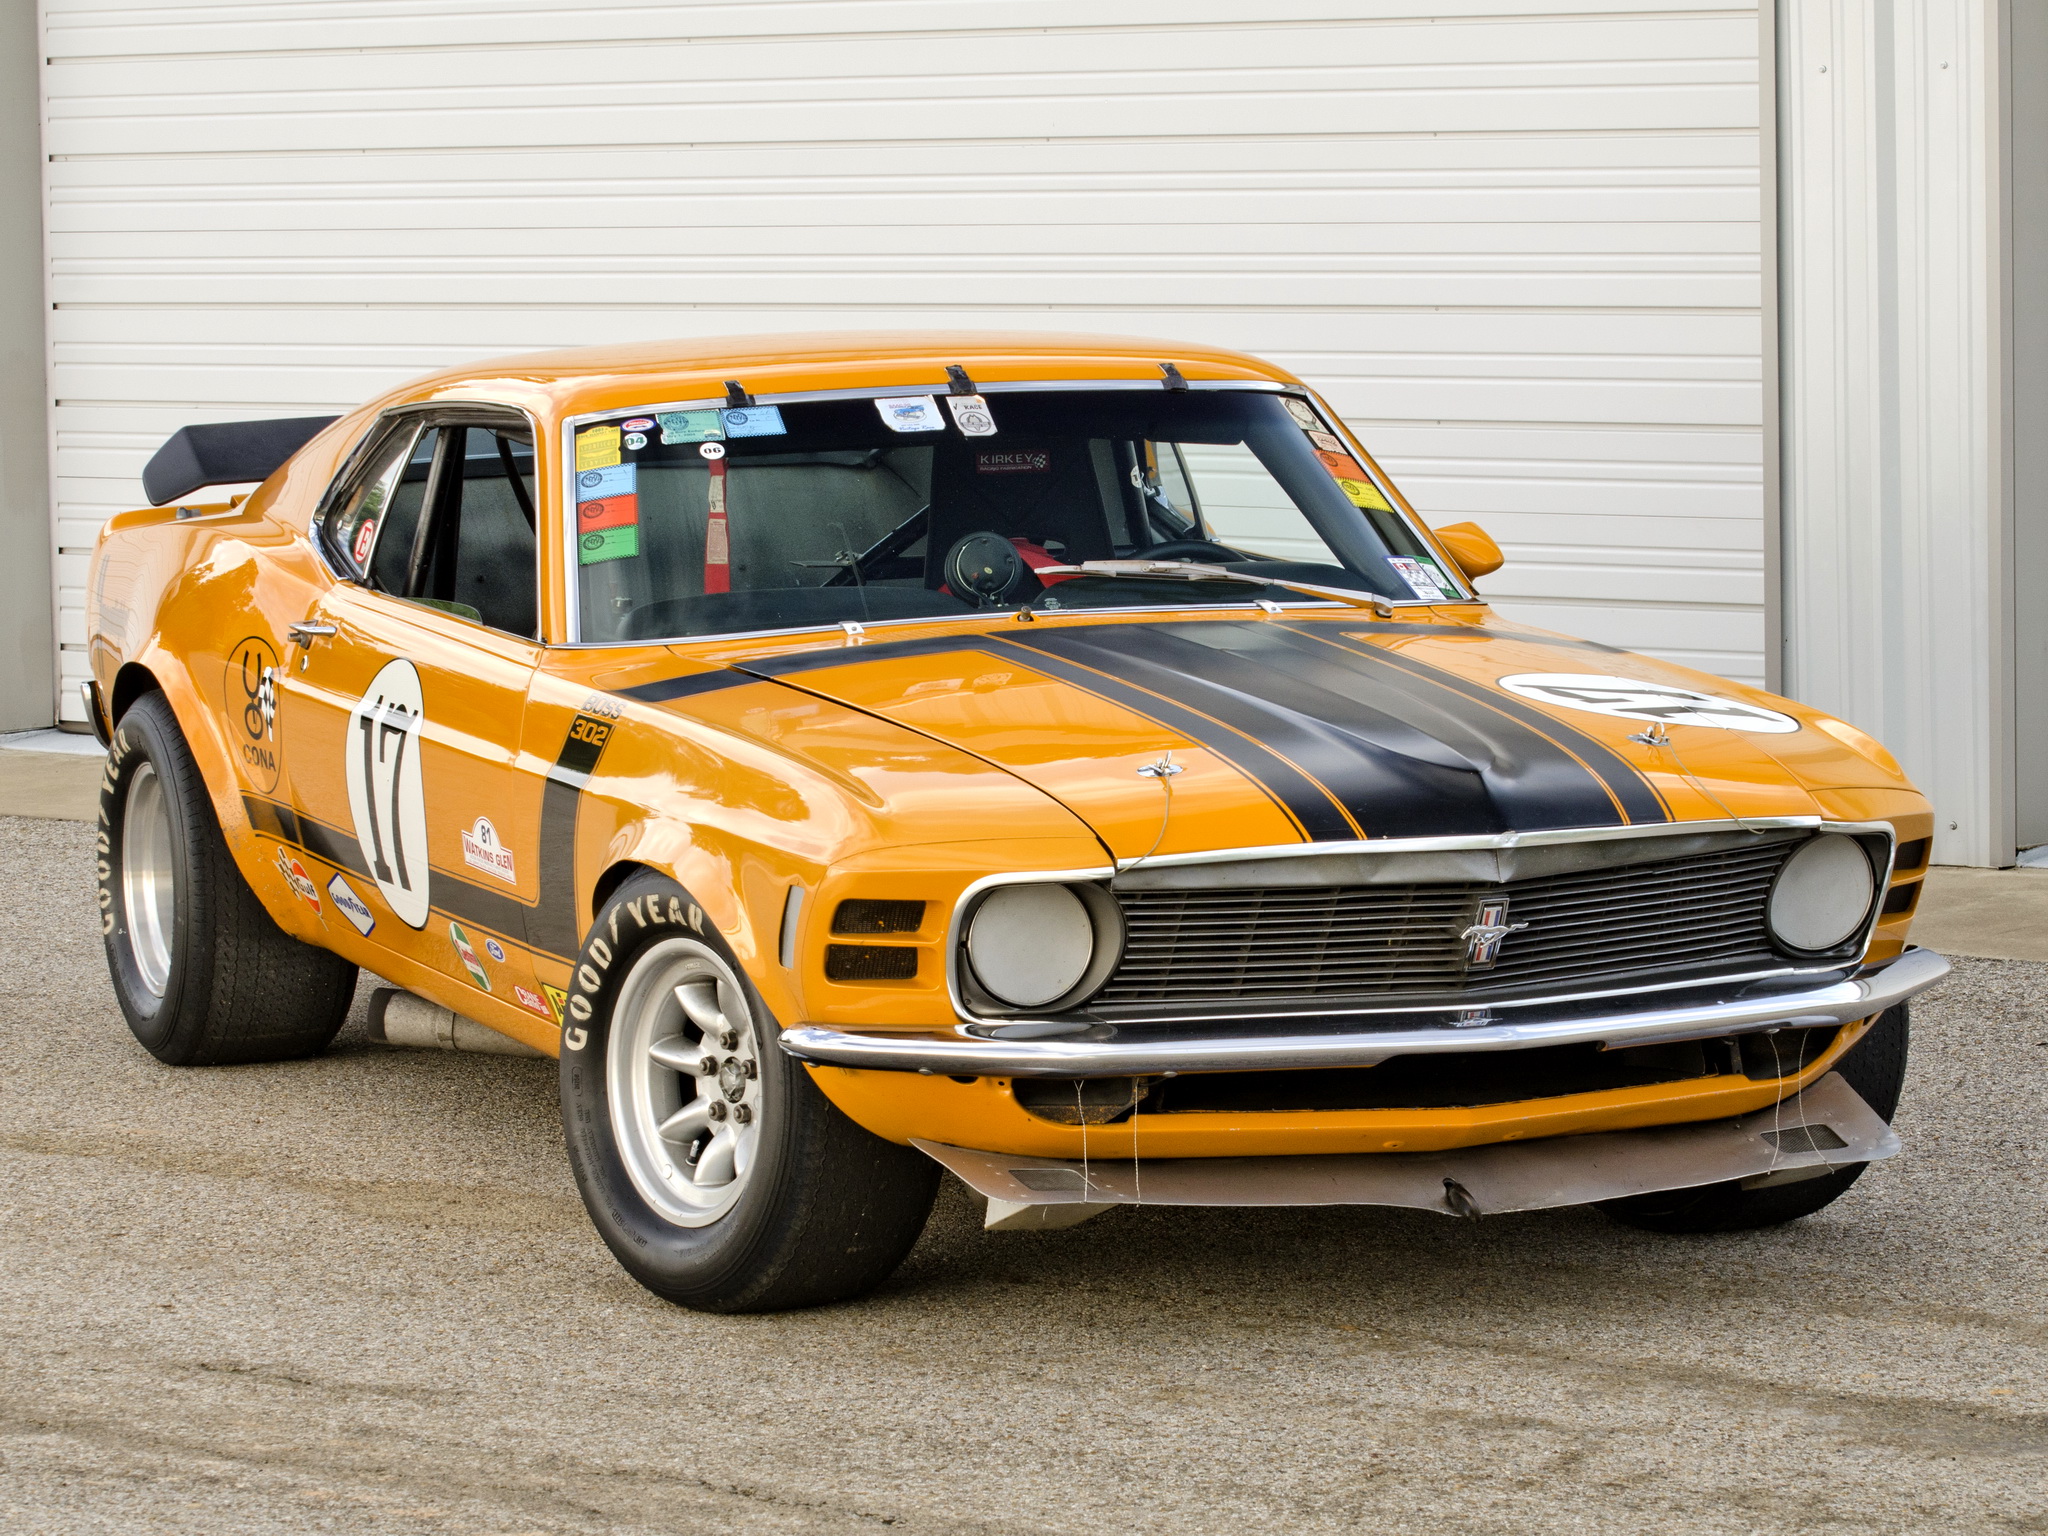 114876-1970-mustang-boss-3-02trans-am-race-racing-muscle-classic-hot-rod-rods.jpg